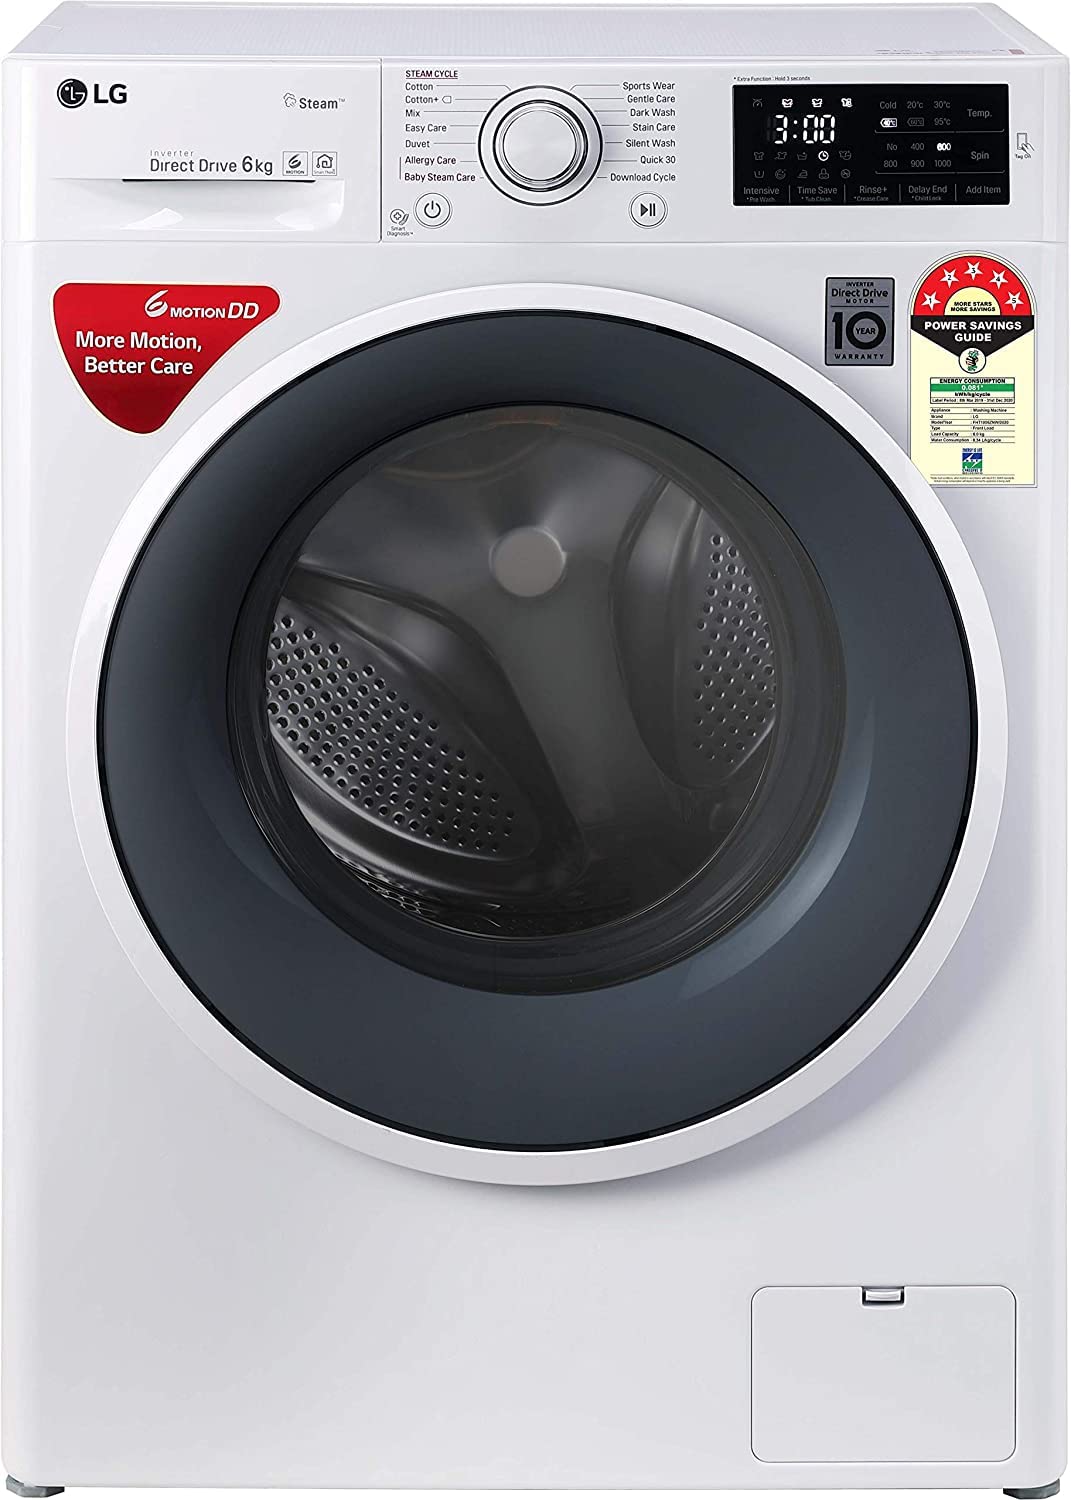 LG 6 Motion Inverter Direct Drive Washing Machine - Best Washing Machine Malaysia - Shop Journey